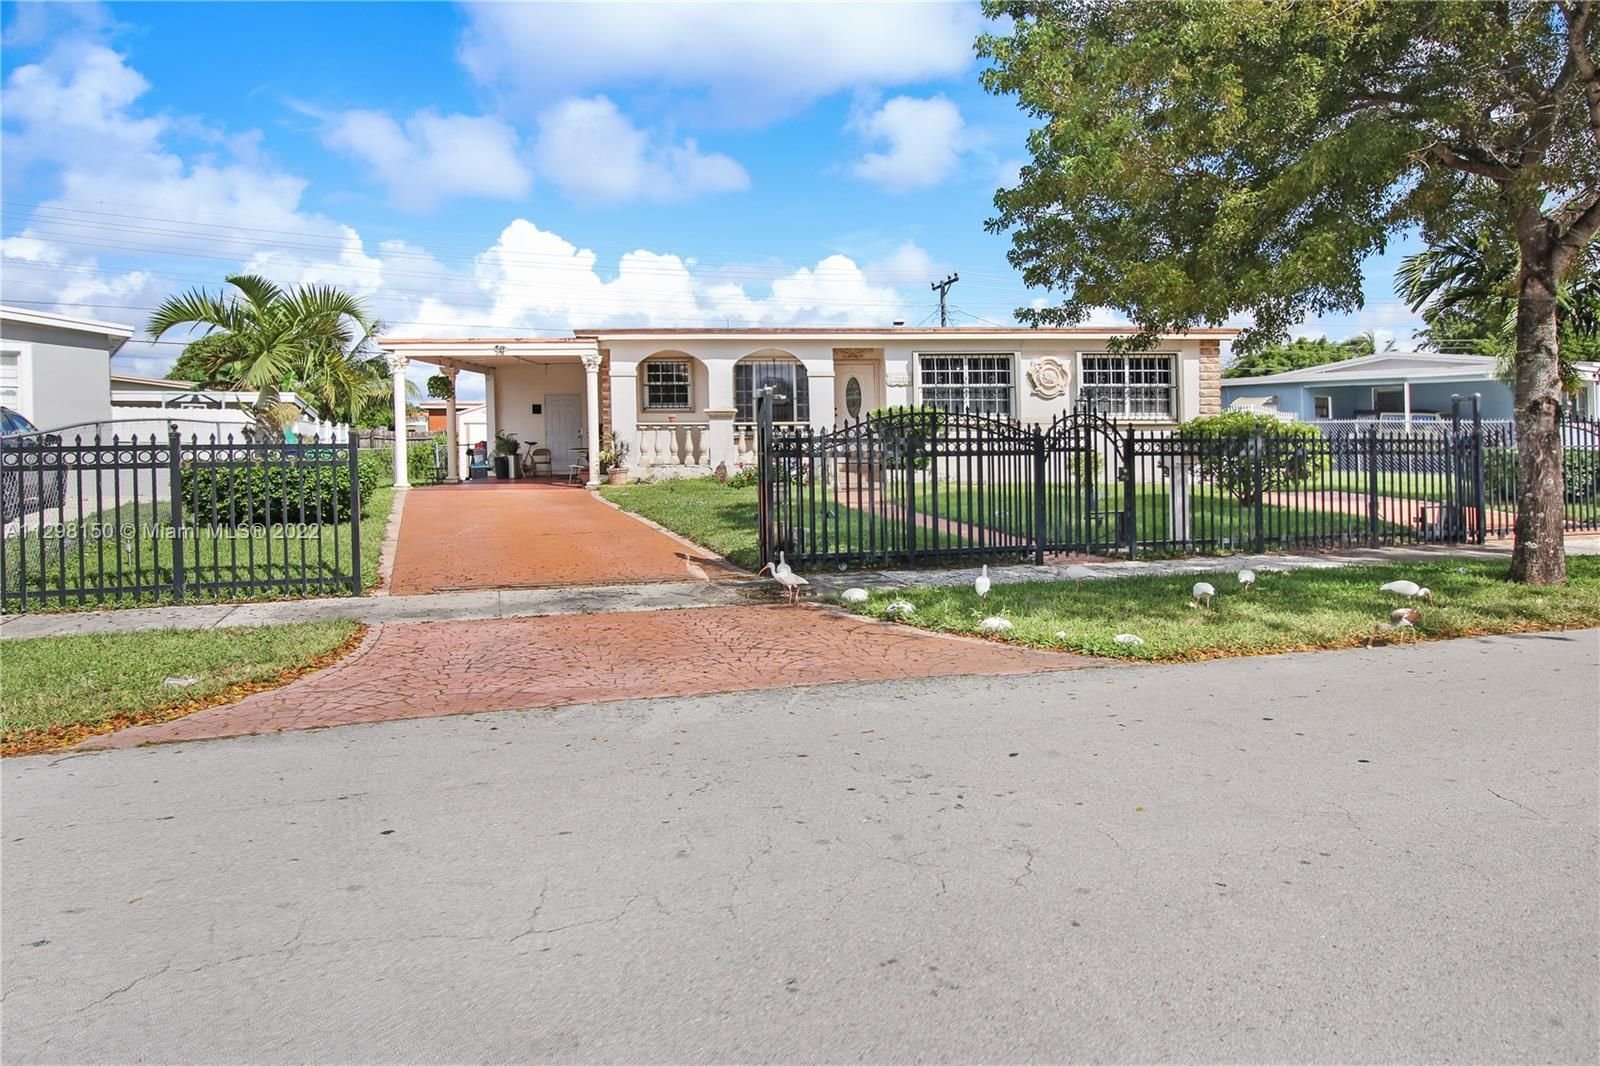 Real estate property located at 3451 178th St, Miami-Dade County, Miami Gardens, FL